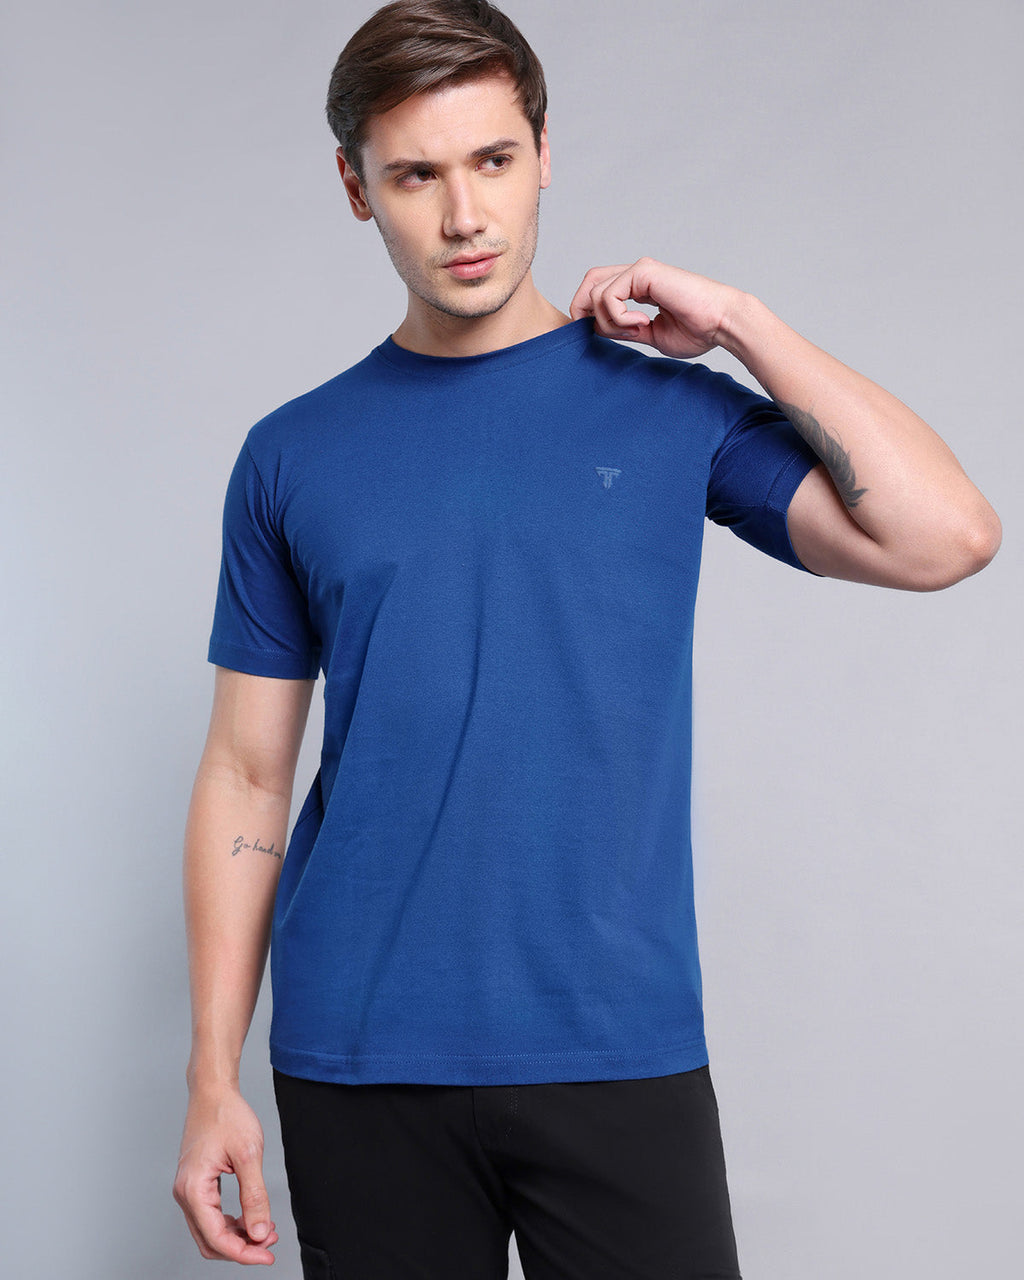 – Cotton Cerulean Soft Premium Super T-Shirt hamercopglobal Blue